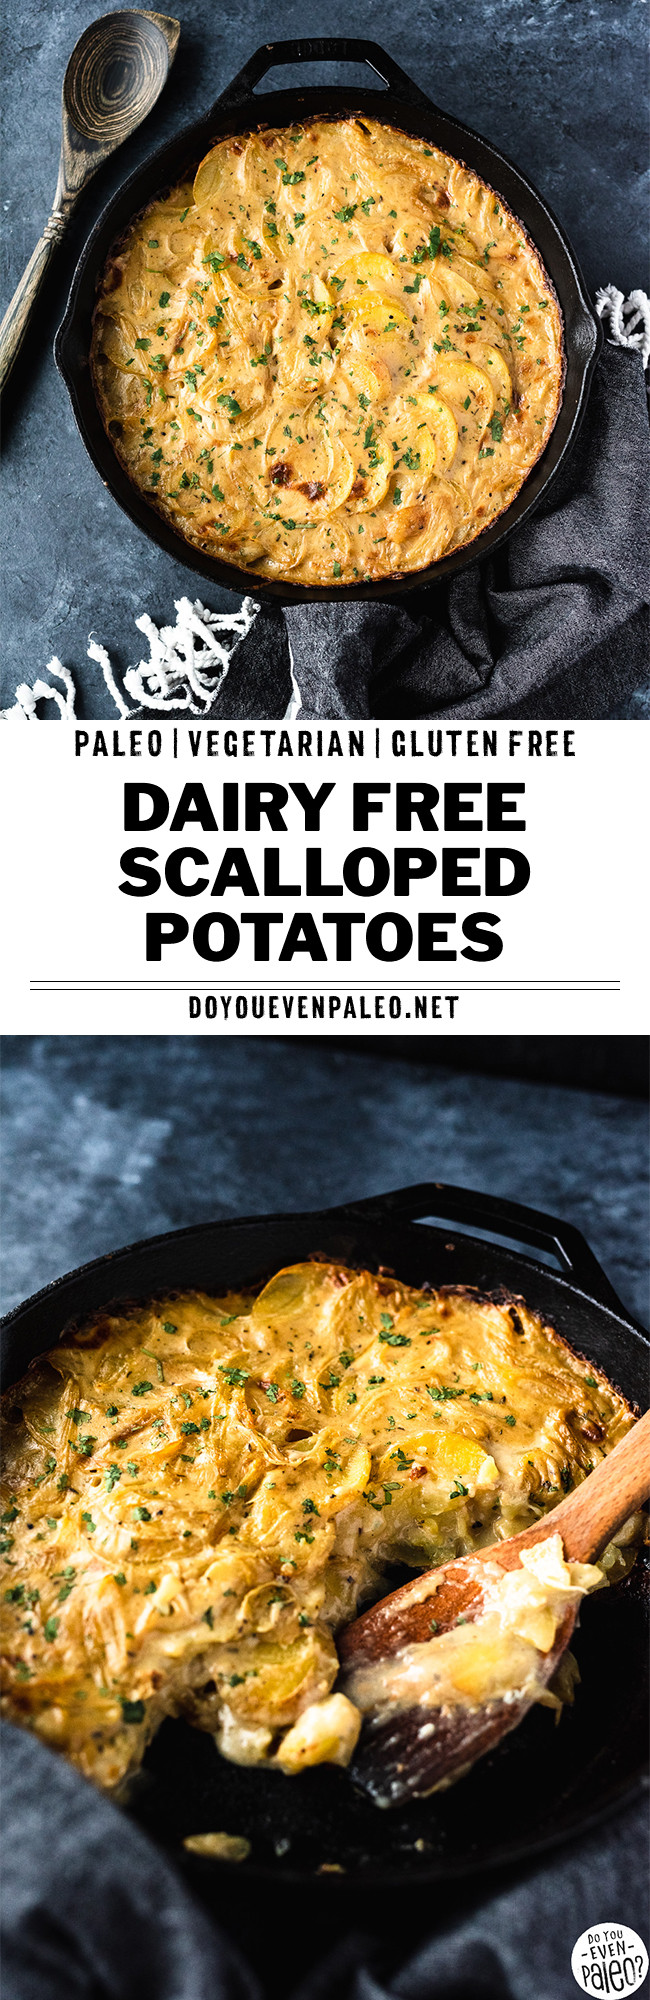 Gluten Free Dairy Free Scalloped Potatoes
 The 24 Best Ideas for Gluten Free Dairy Free Scalloped